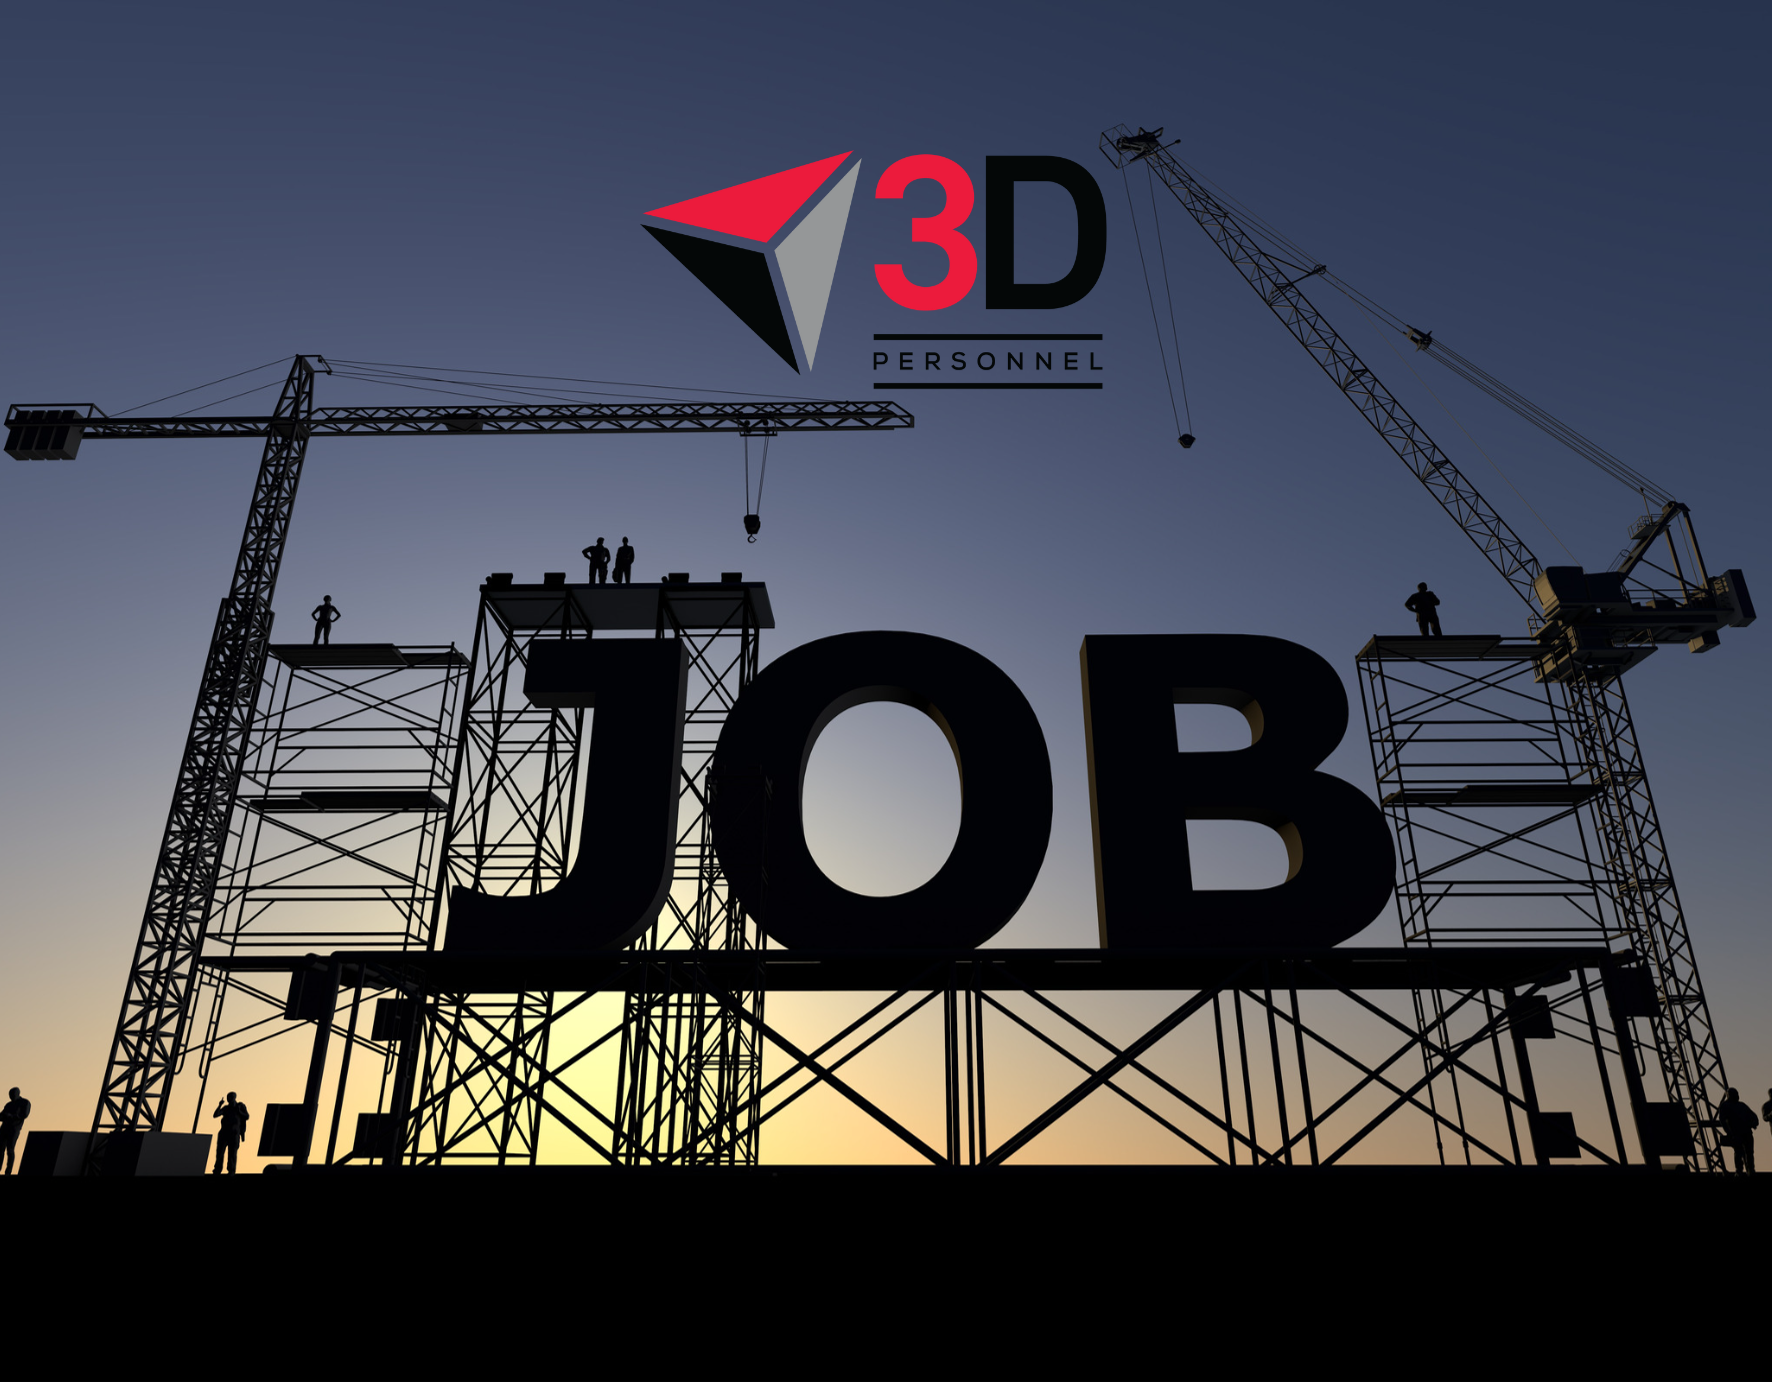 3D Construction site silhouette with 3D logo